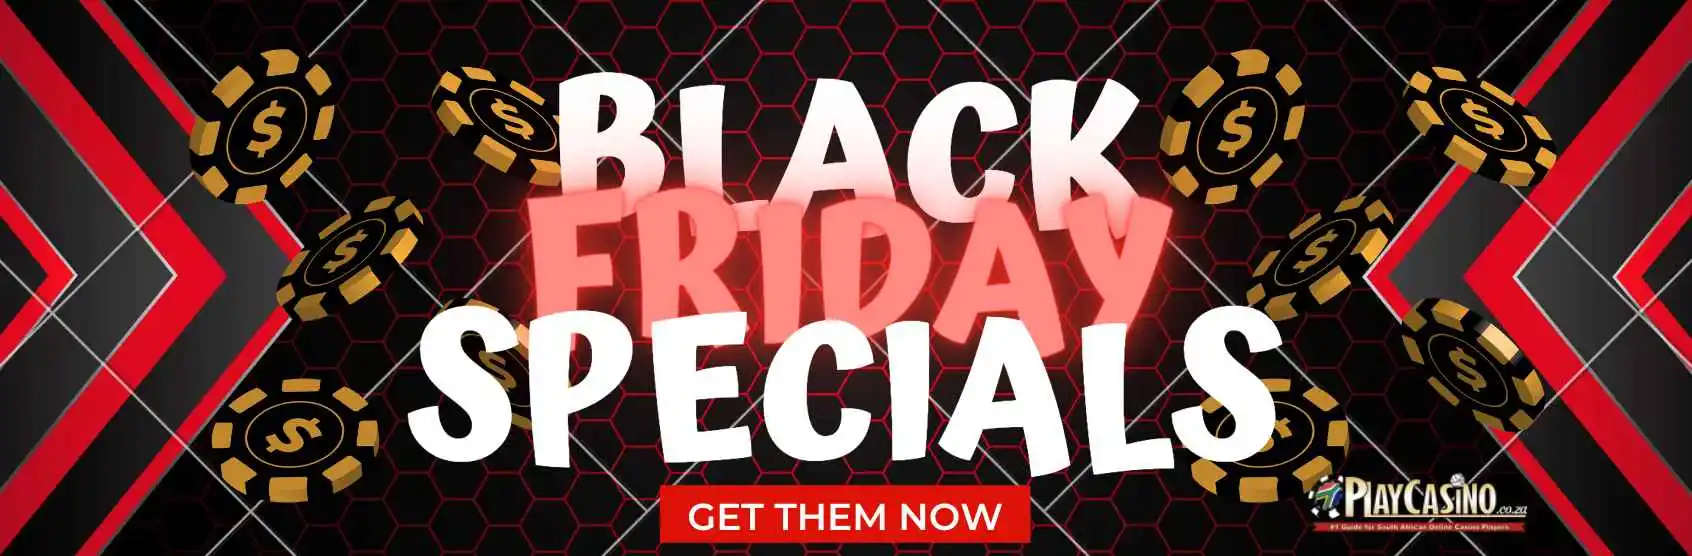 Black Friday specials at online casinos South Africa